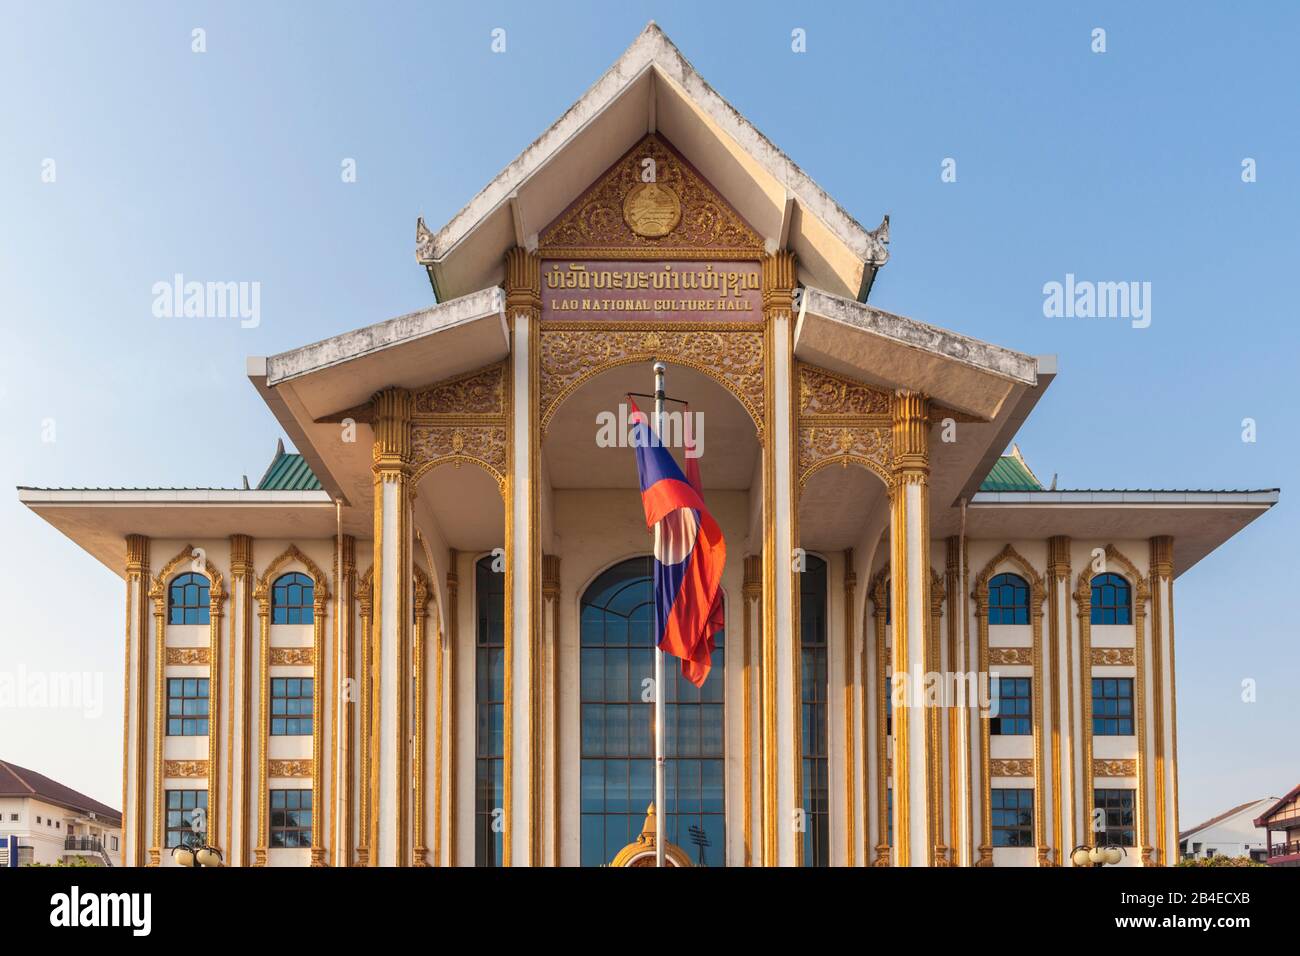 Laos, Vientiane, Lao National Culture Hall, exterior Stock Photo